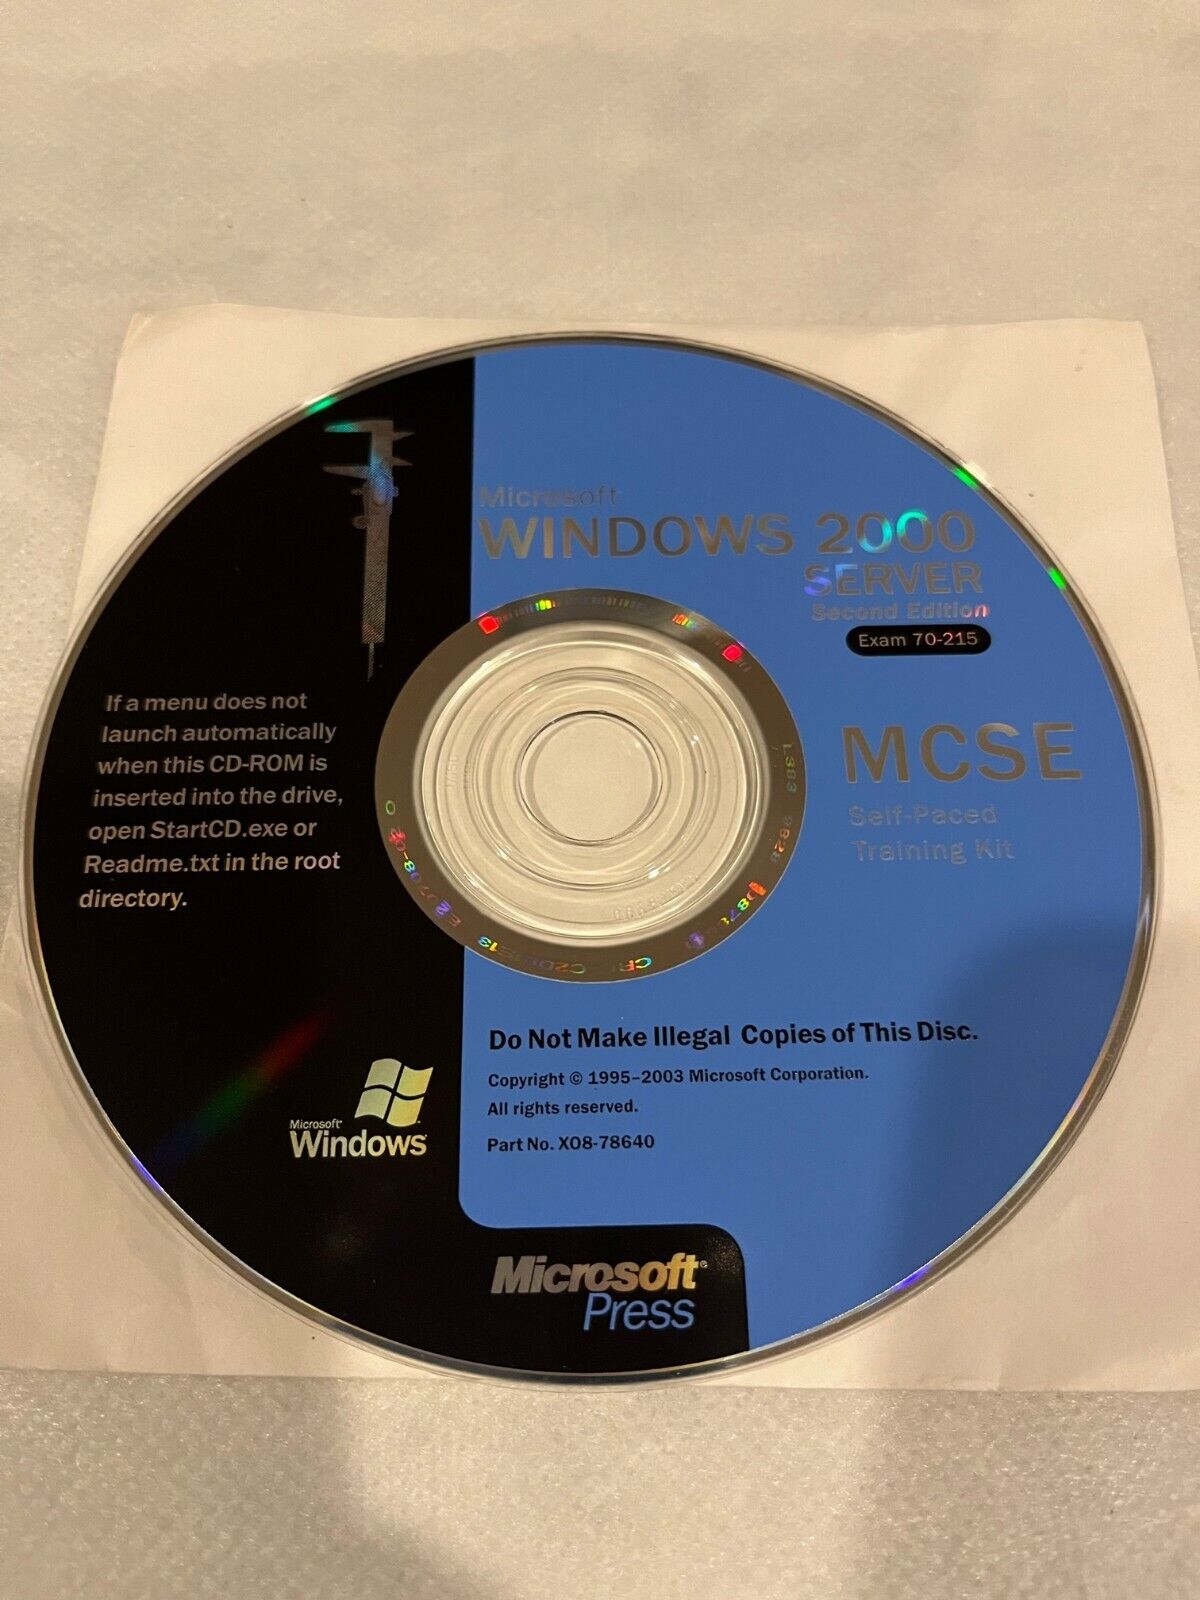 Microsoft Windows 2000 Server 2nd Edition Exam 70-215 MCSE Self-Paced Training 